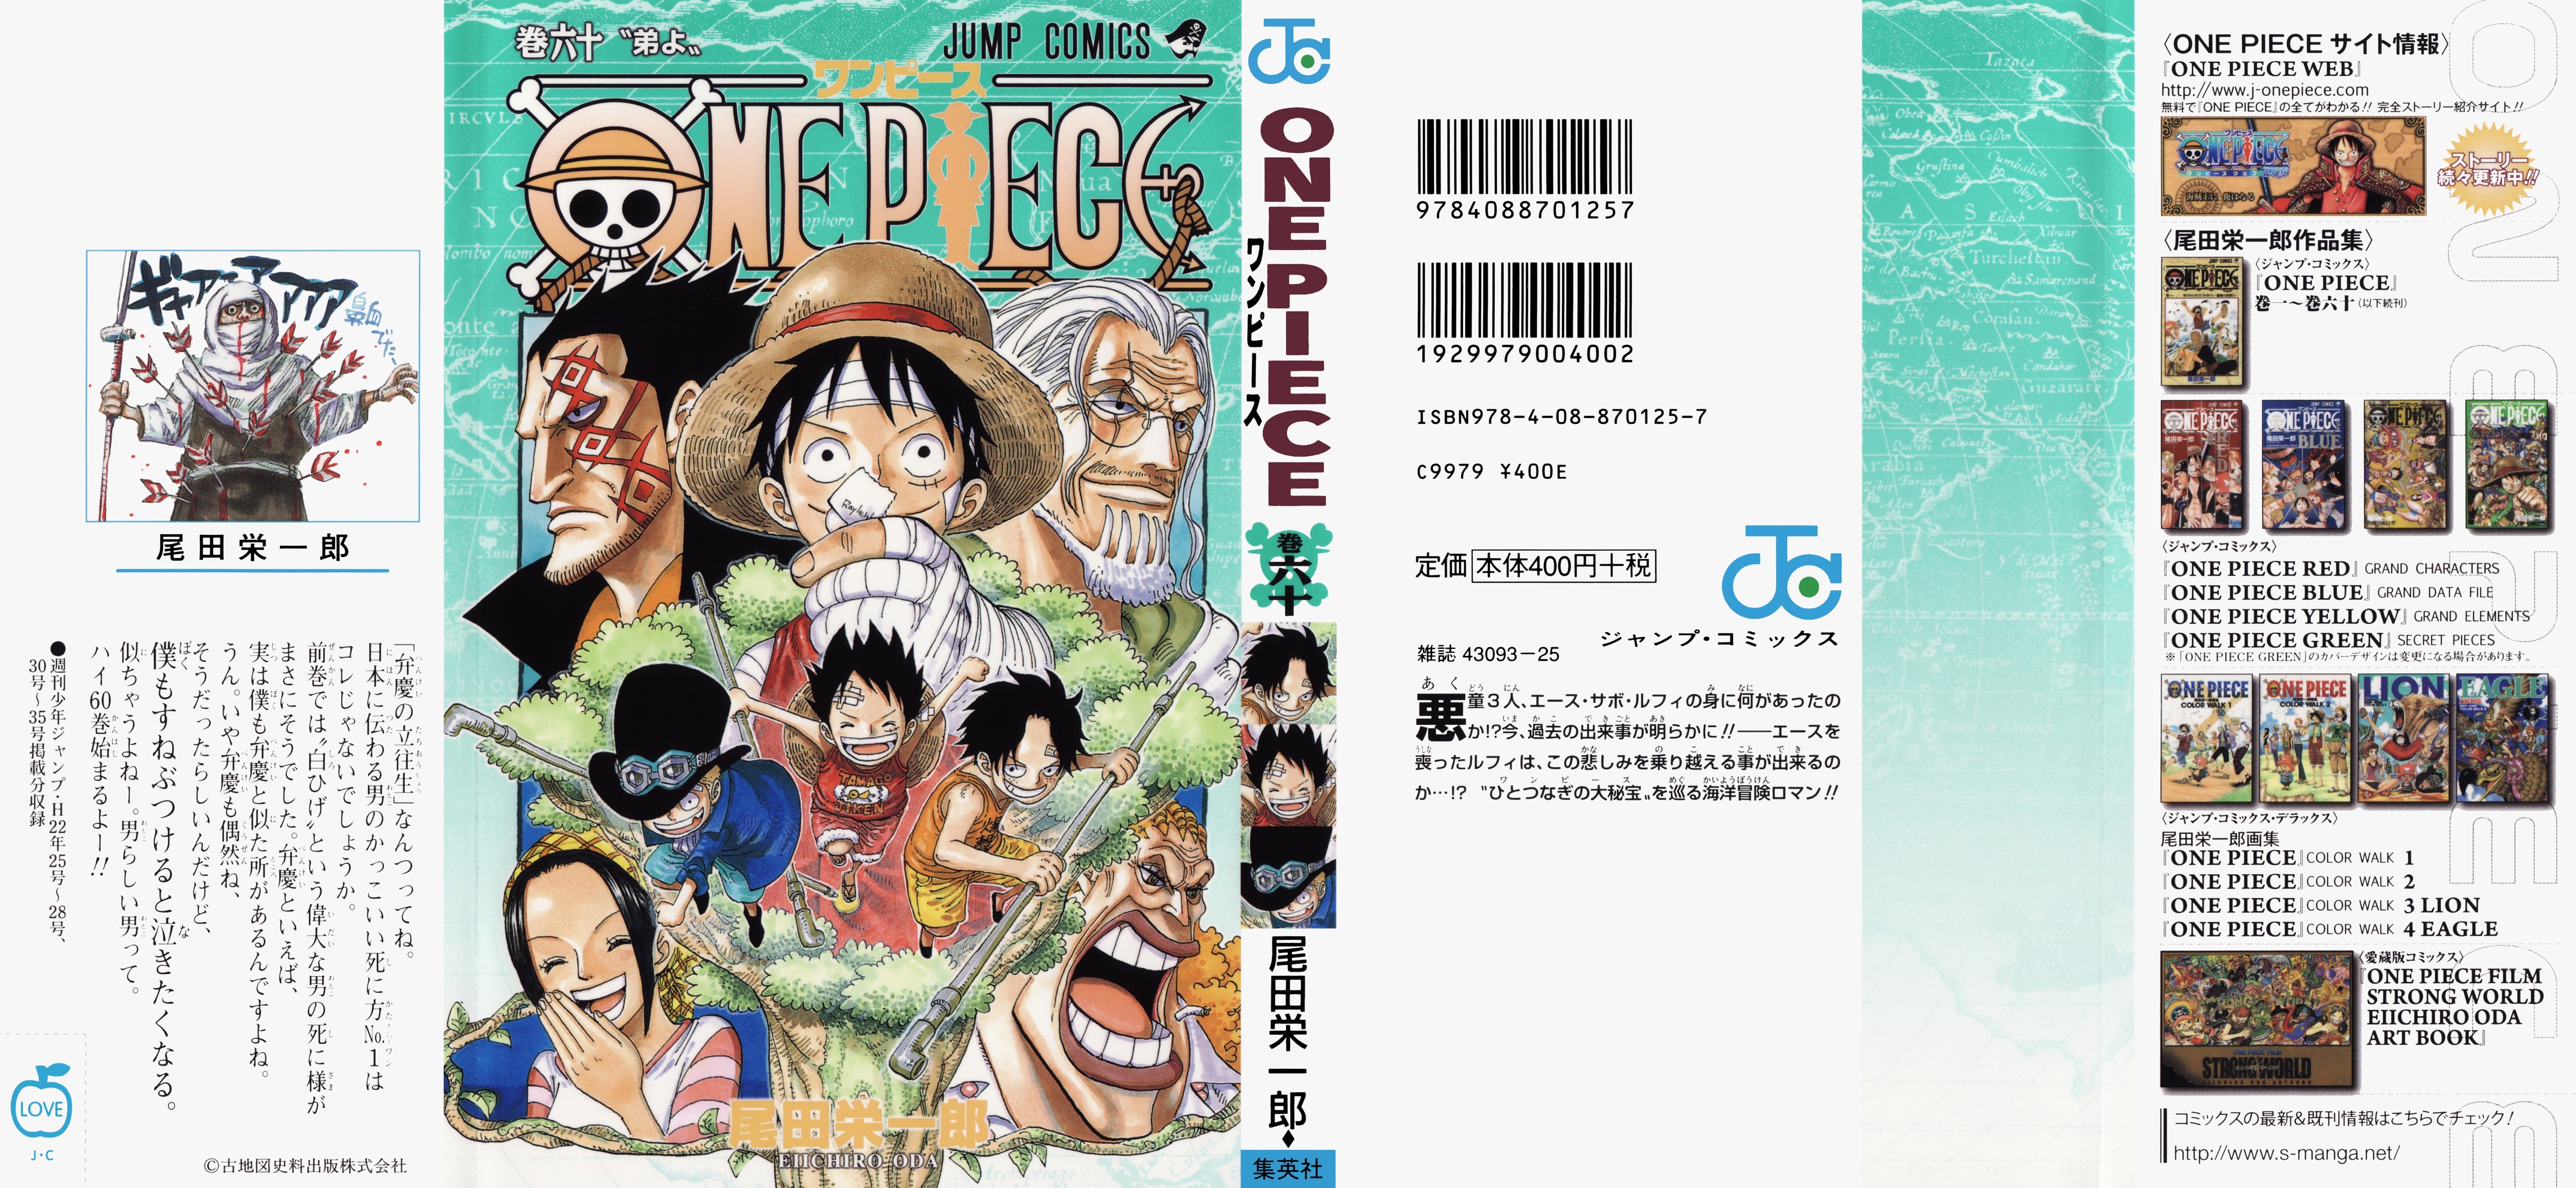 One Piece Vol 60 cover SHQ MQ